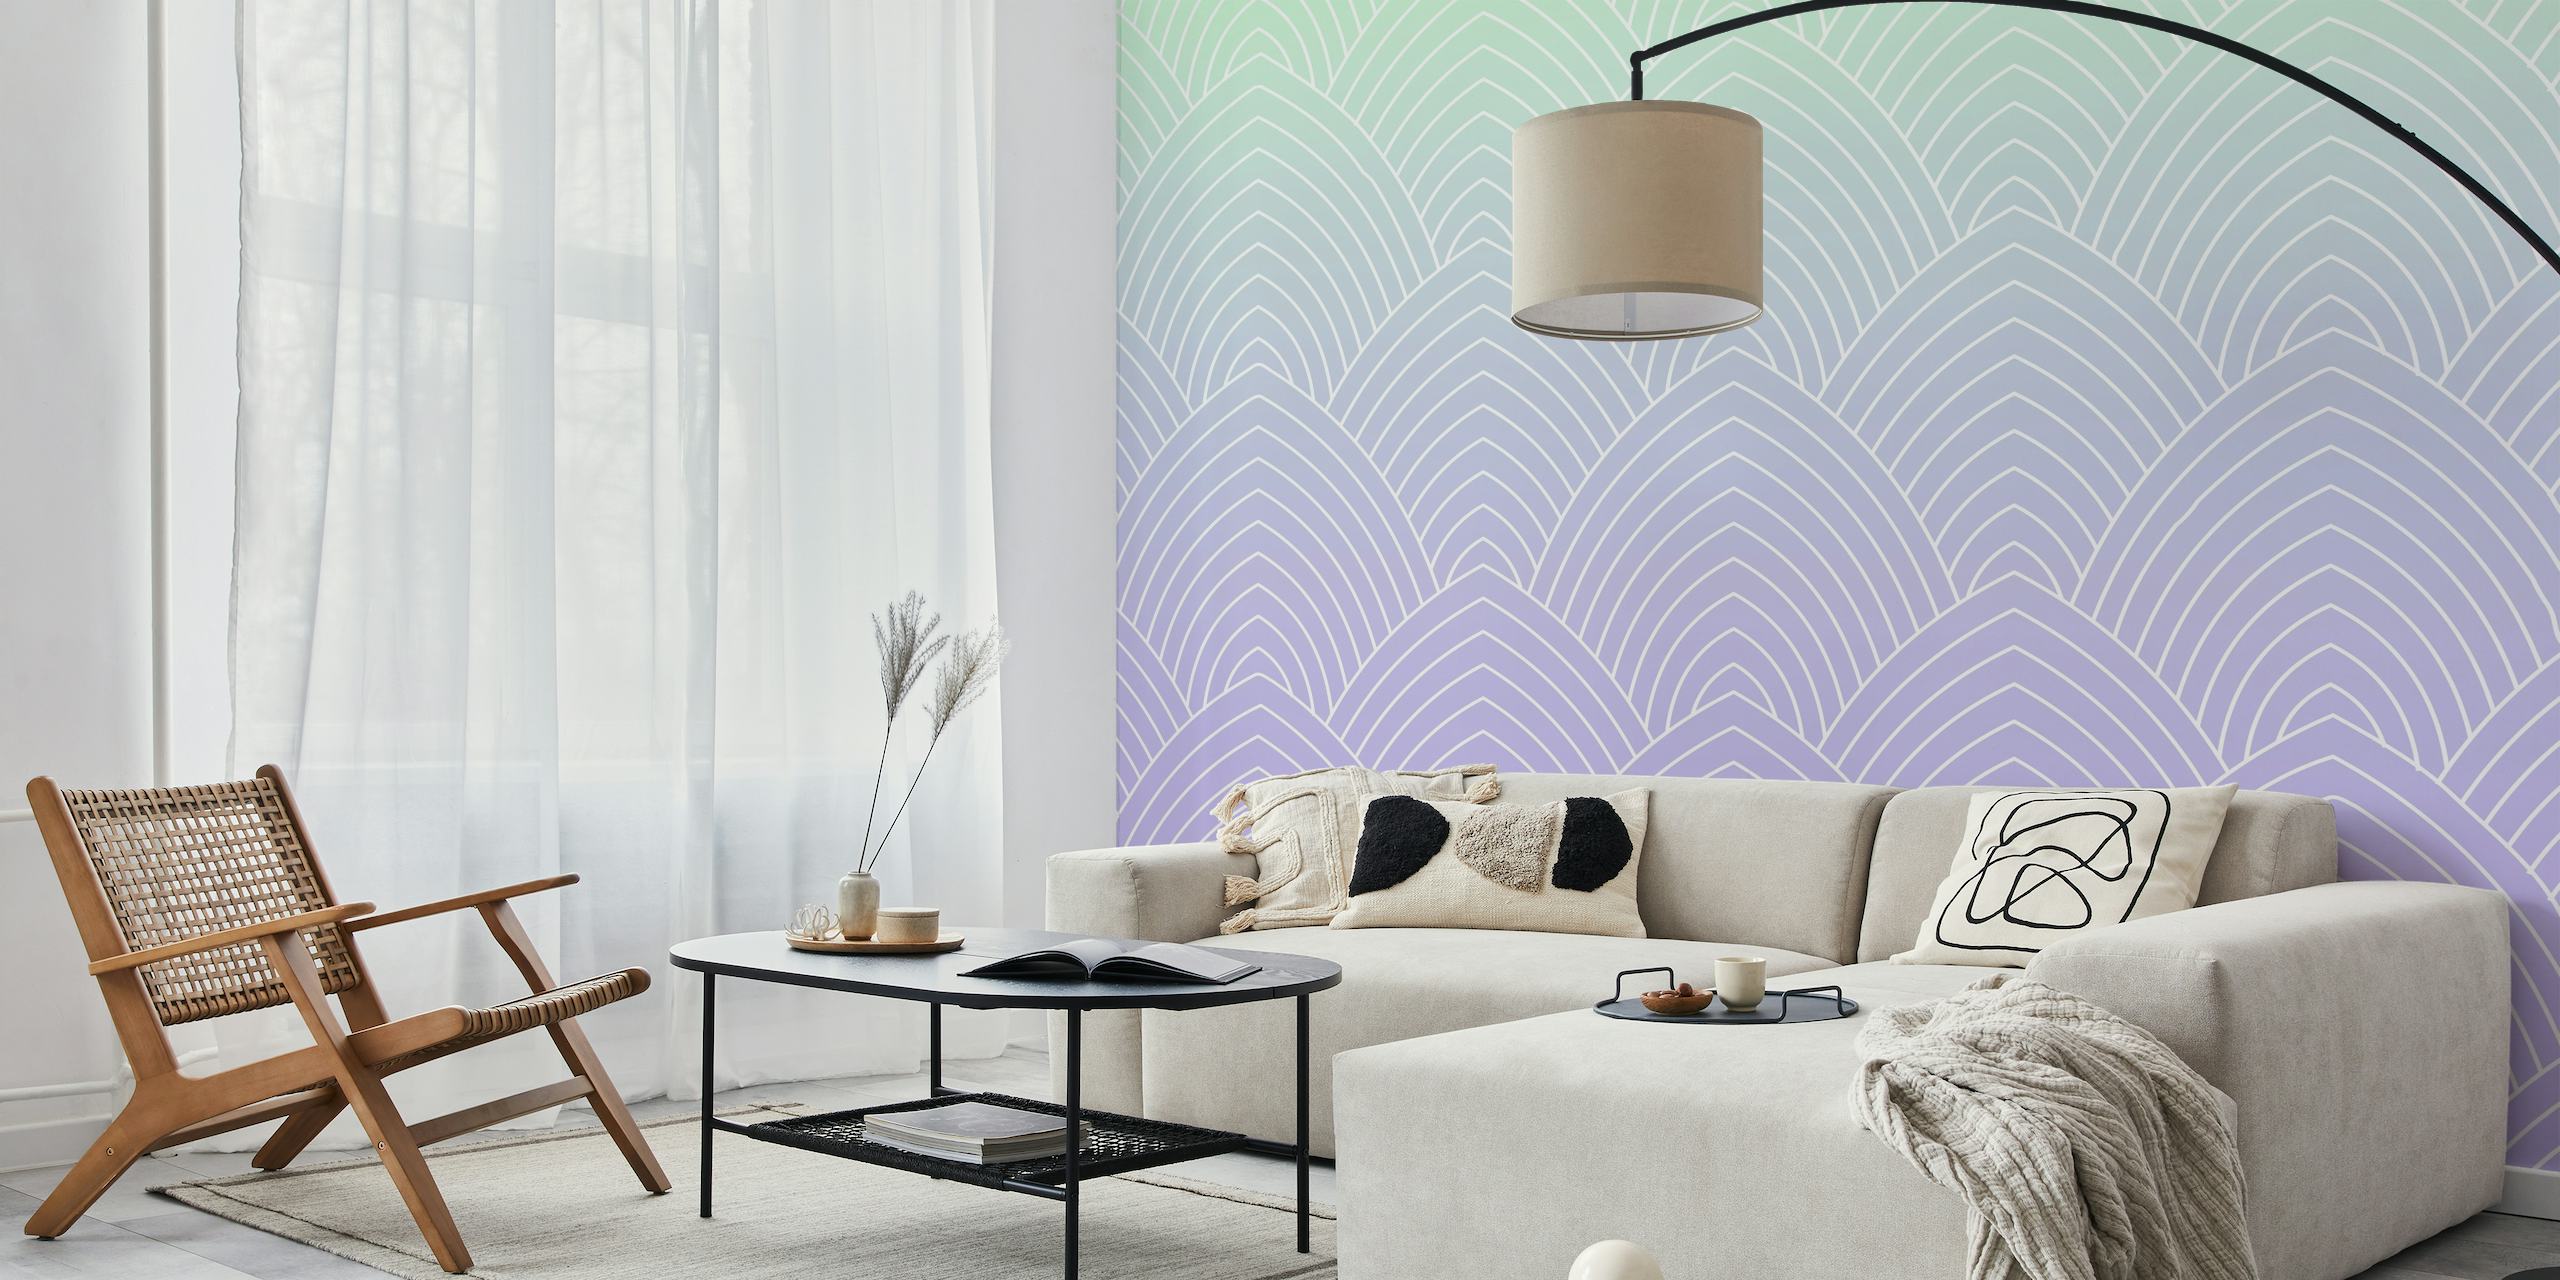 Wandbild im lavendelfarbenen Art-Deco-Modernismus-Muster in sanften Lilatönen.